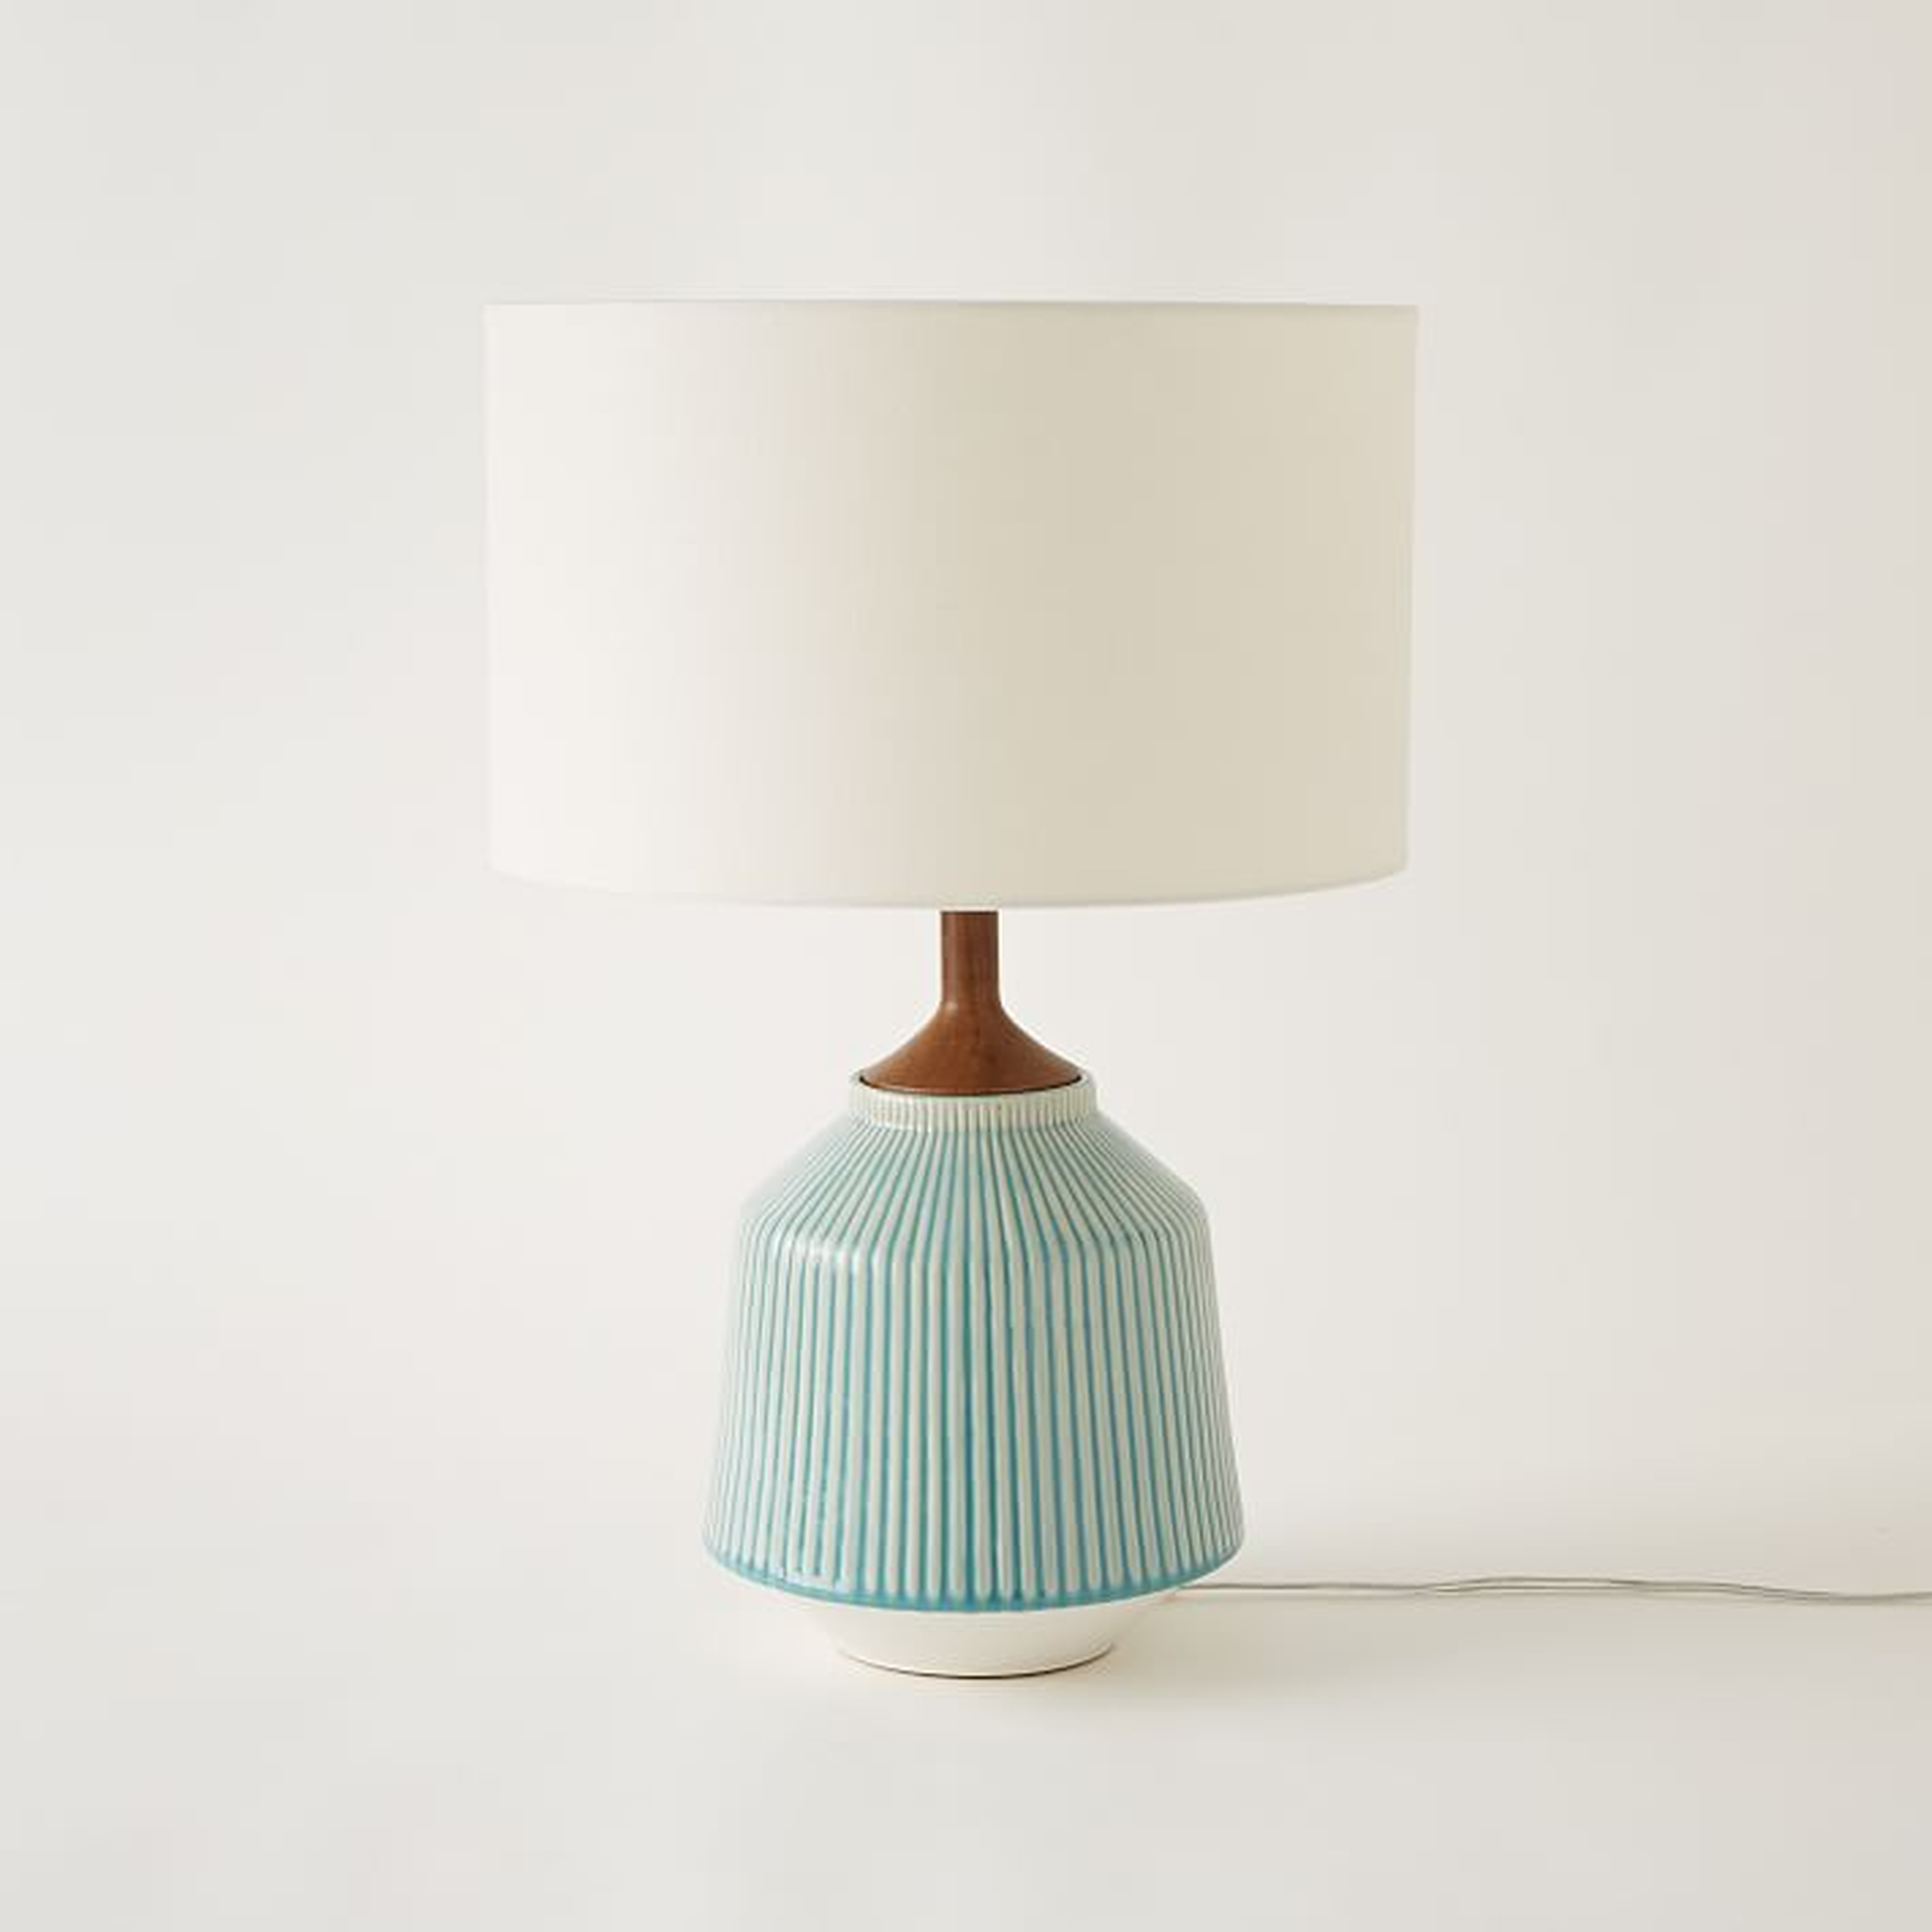 Roar + Rabbit Ripple Ceramic Table Lamp, Large, Turquoise - West Elm